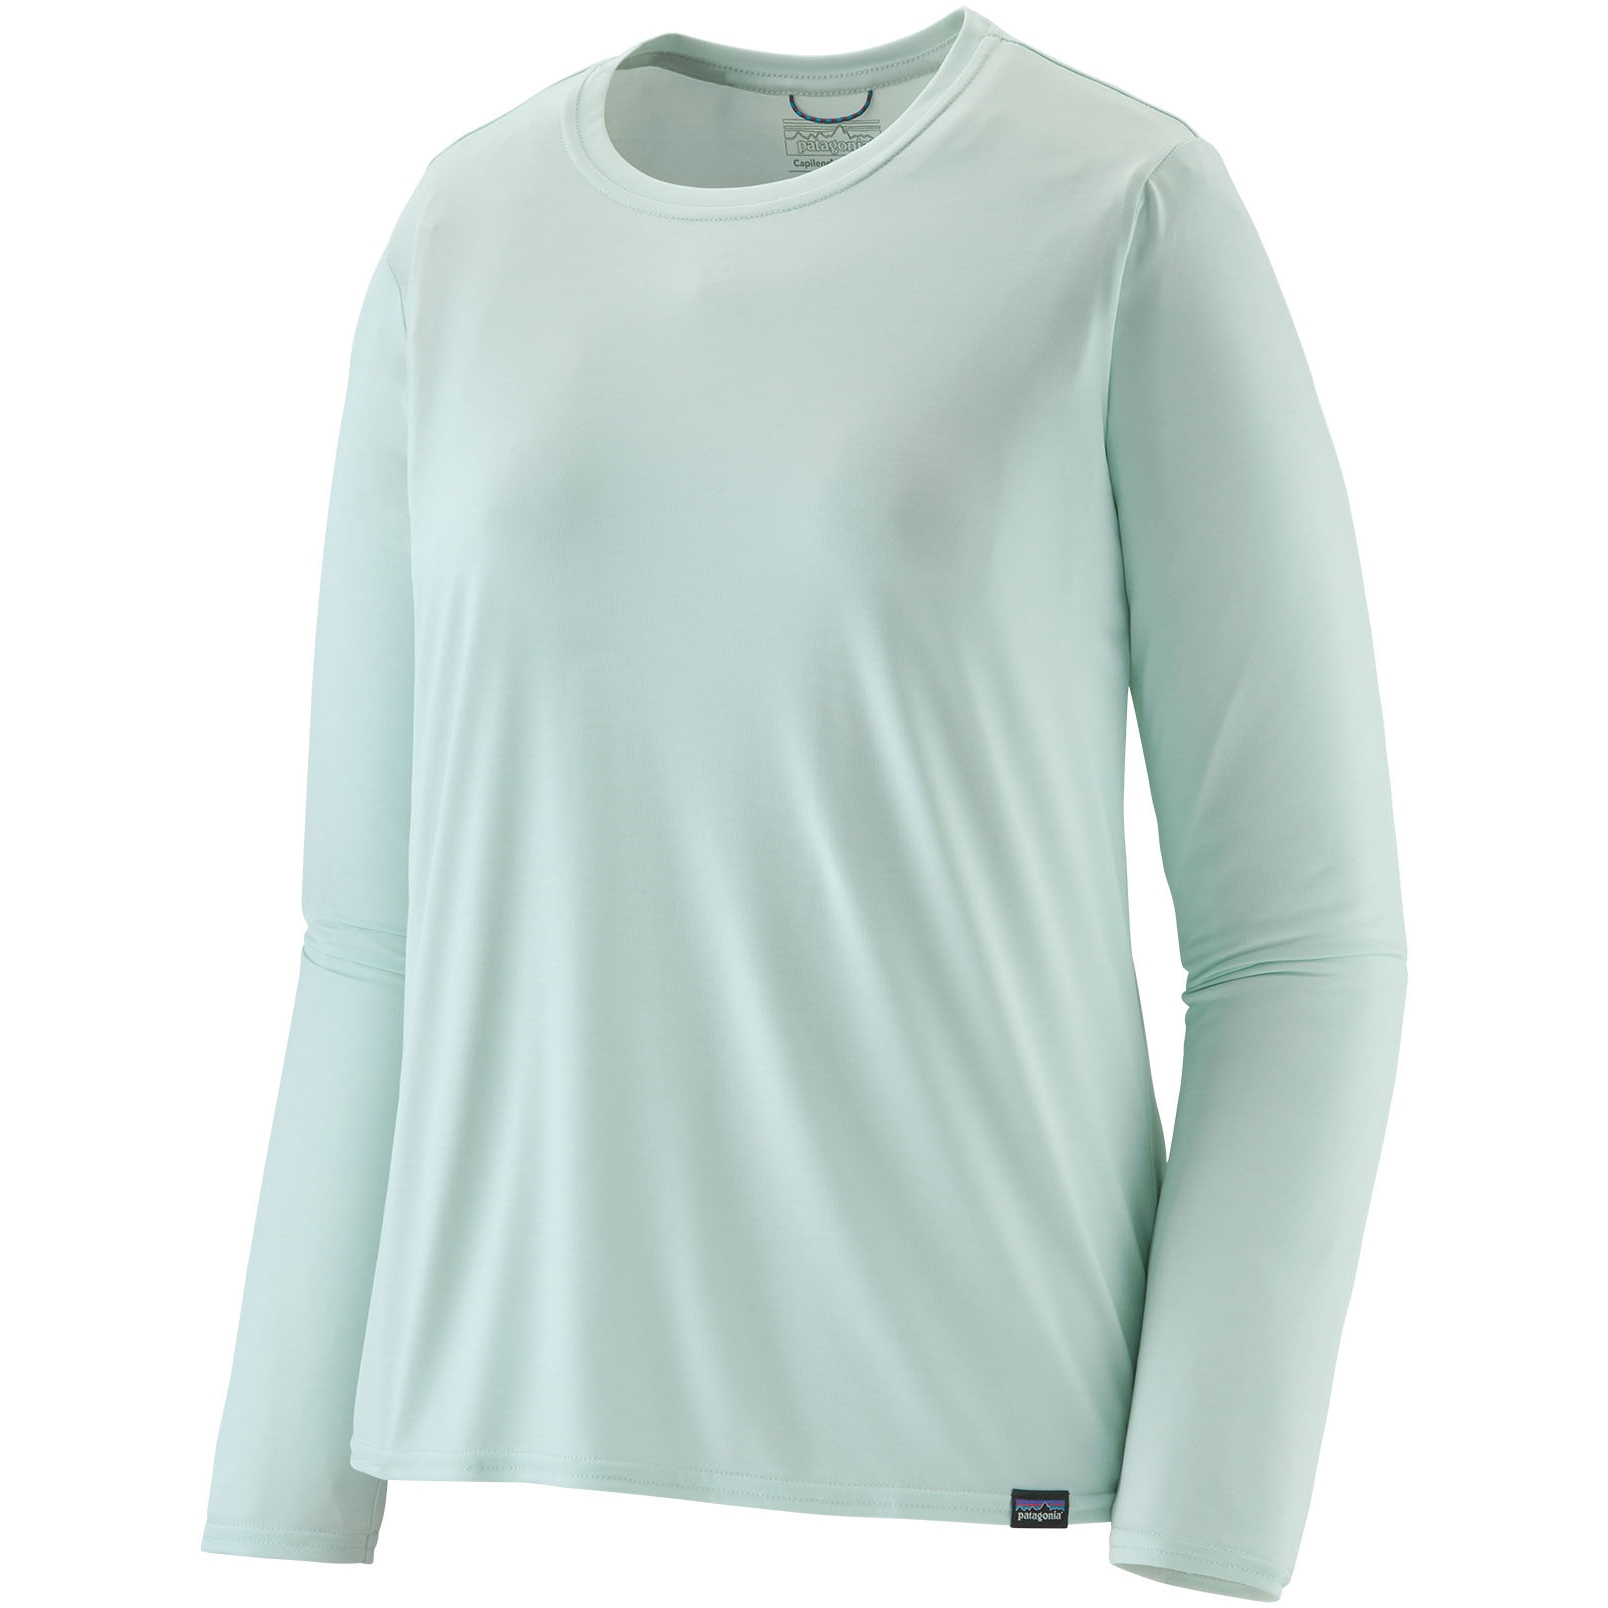 Produktbild von Patagonia Capilene Cool Daily Langarmshirt Damen - Wispy Green - Light Wispy Green X-Dye